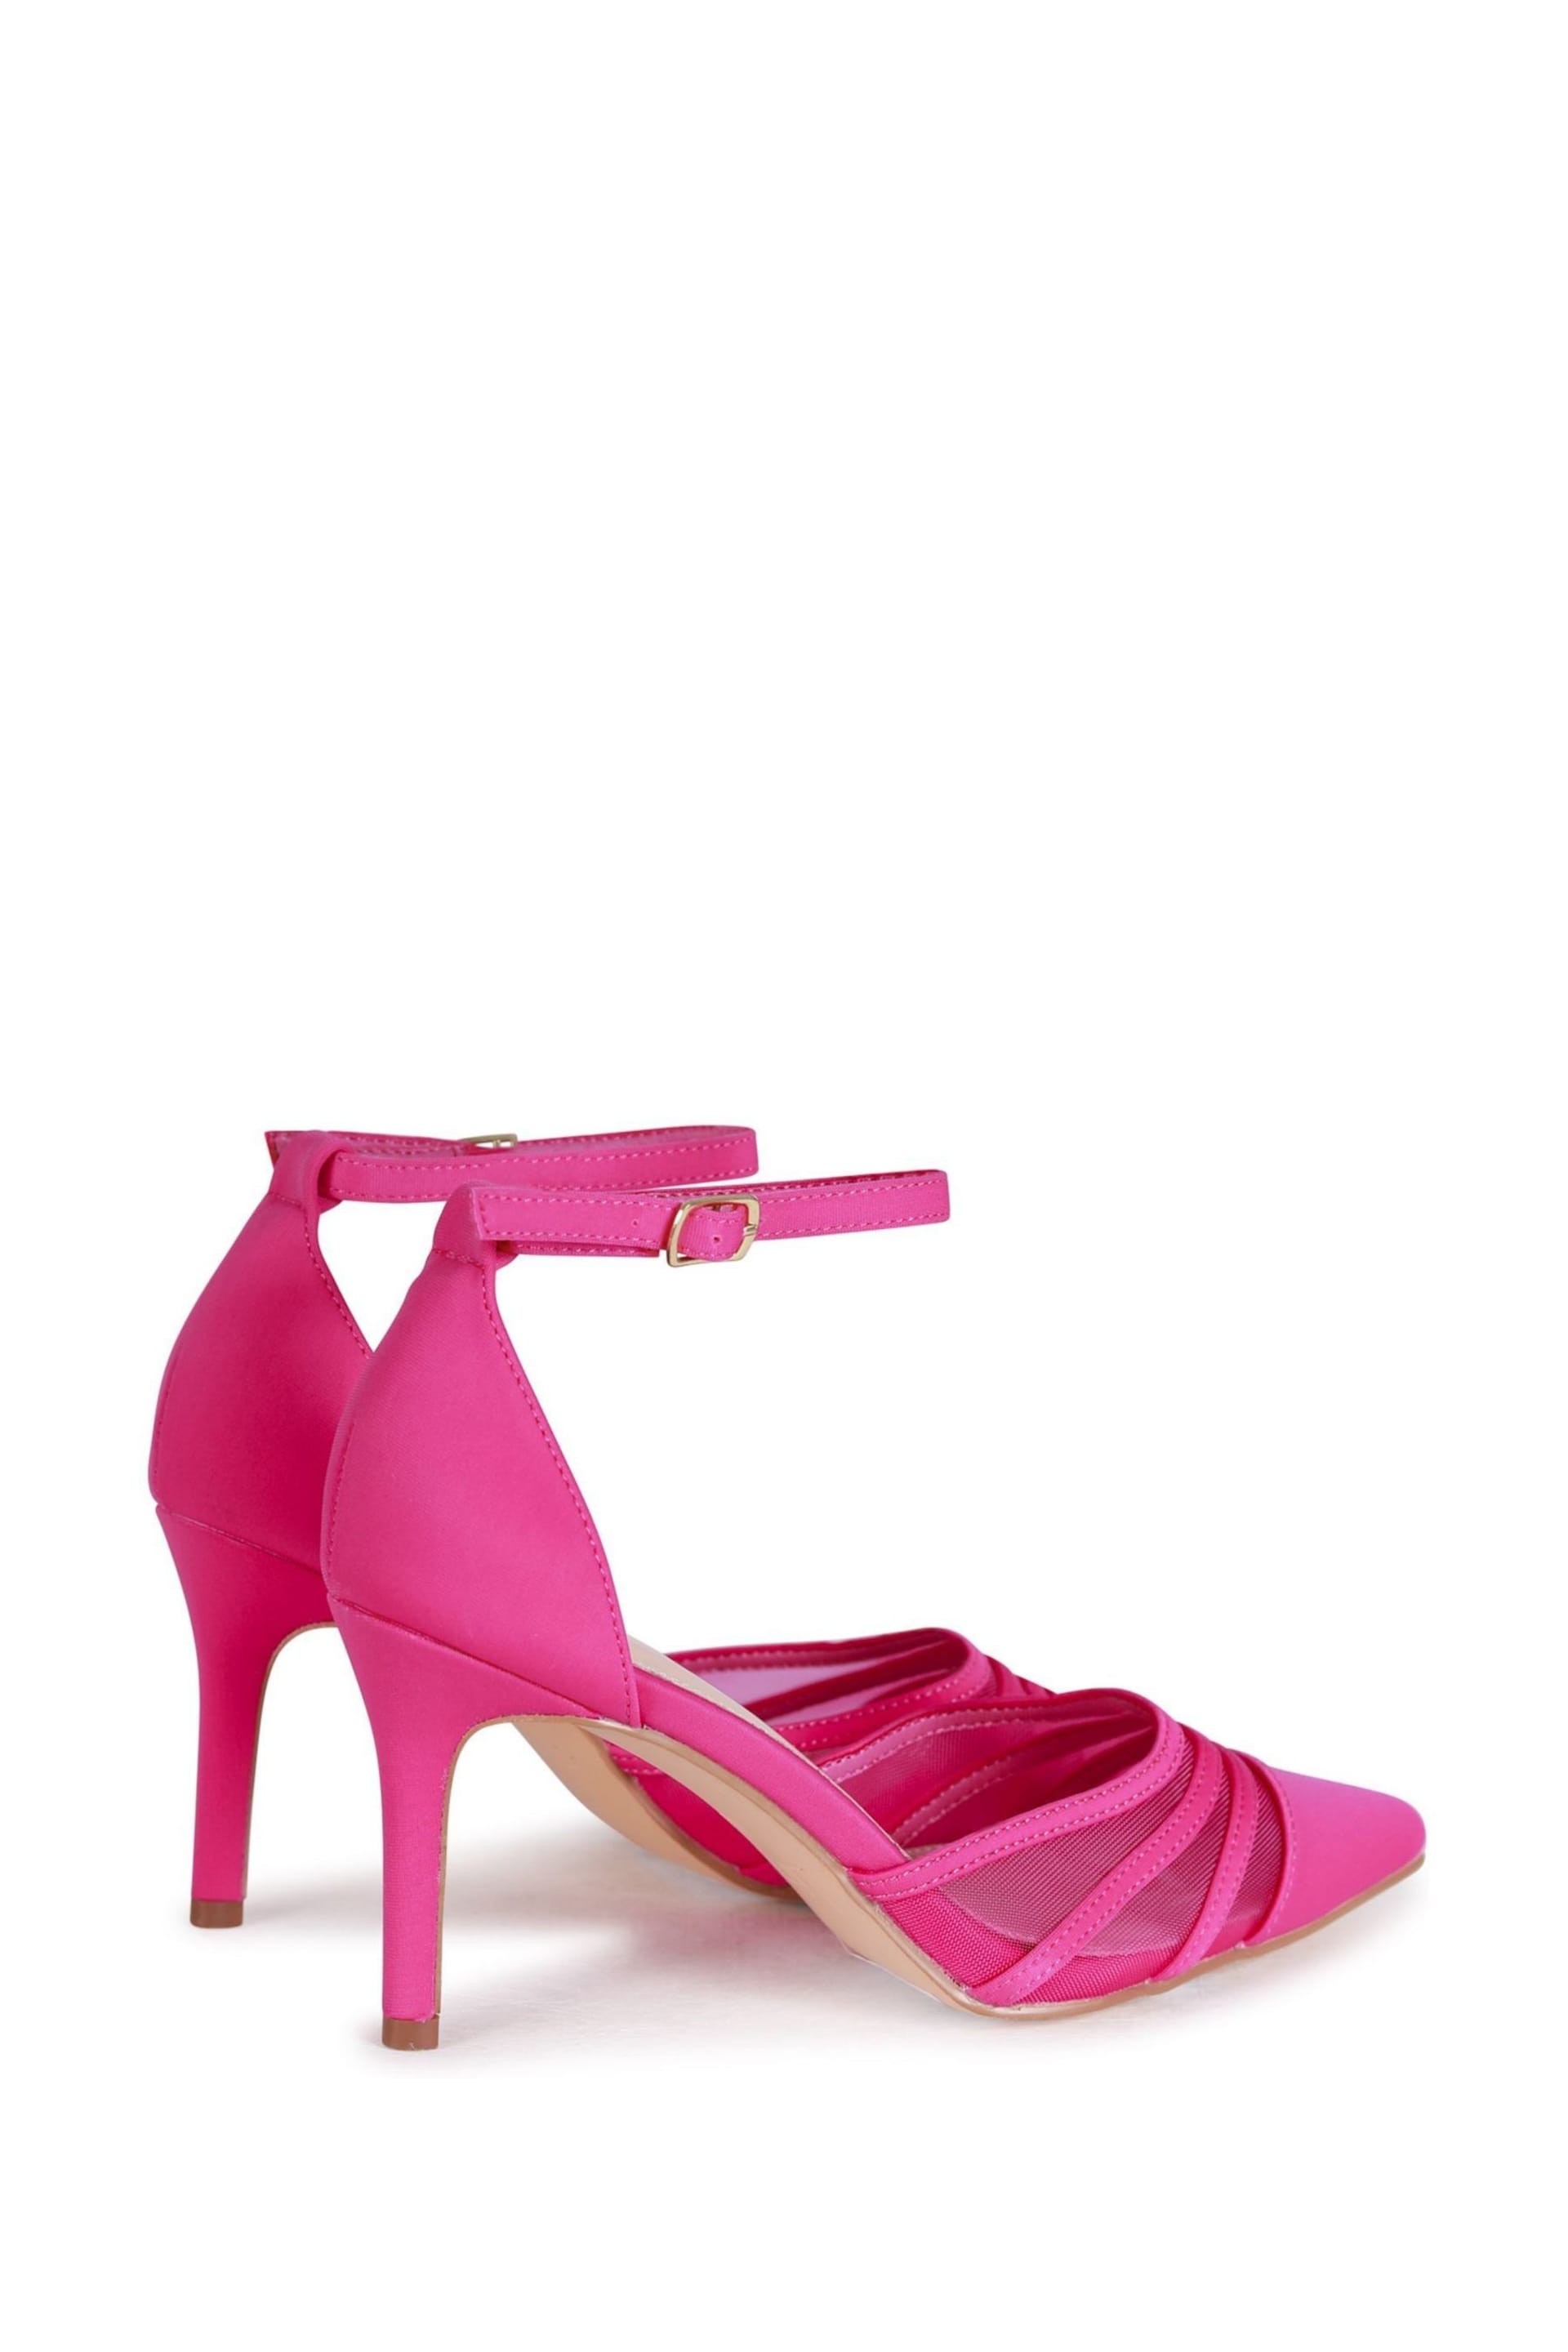 Linzi Pink Serri Court Stiletto Heels With Mesh Front Detail - Image 4 of 4